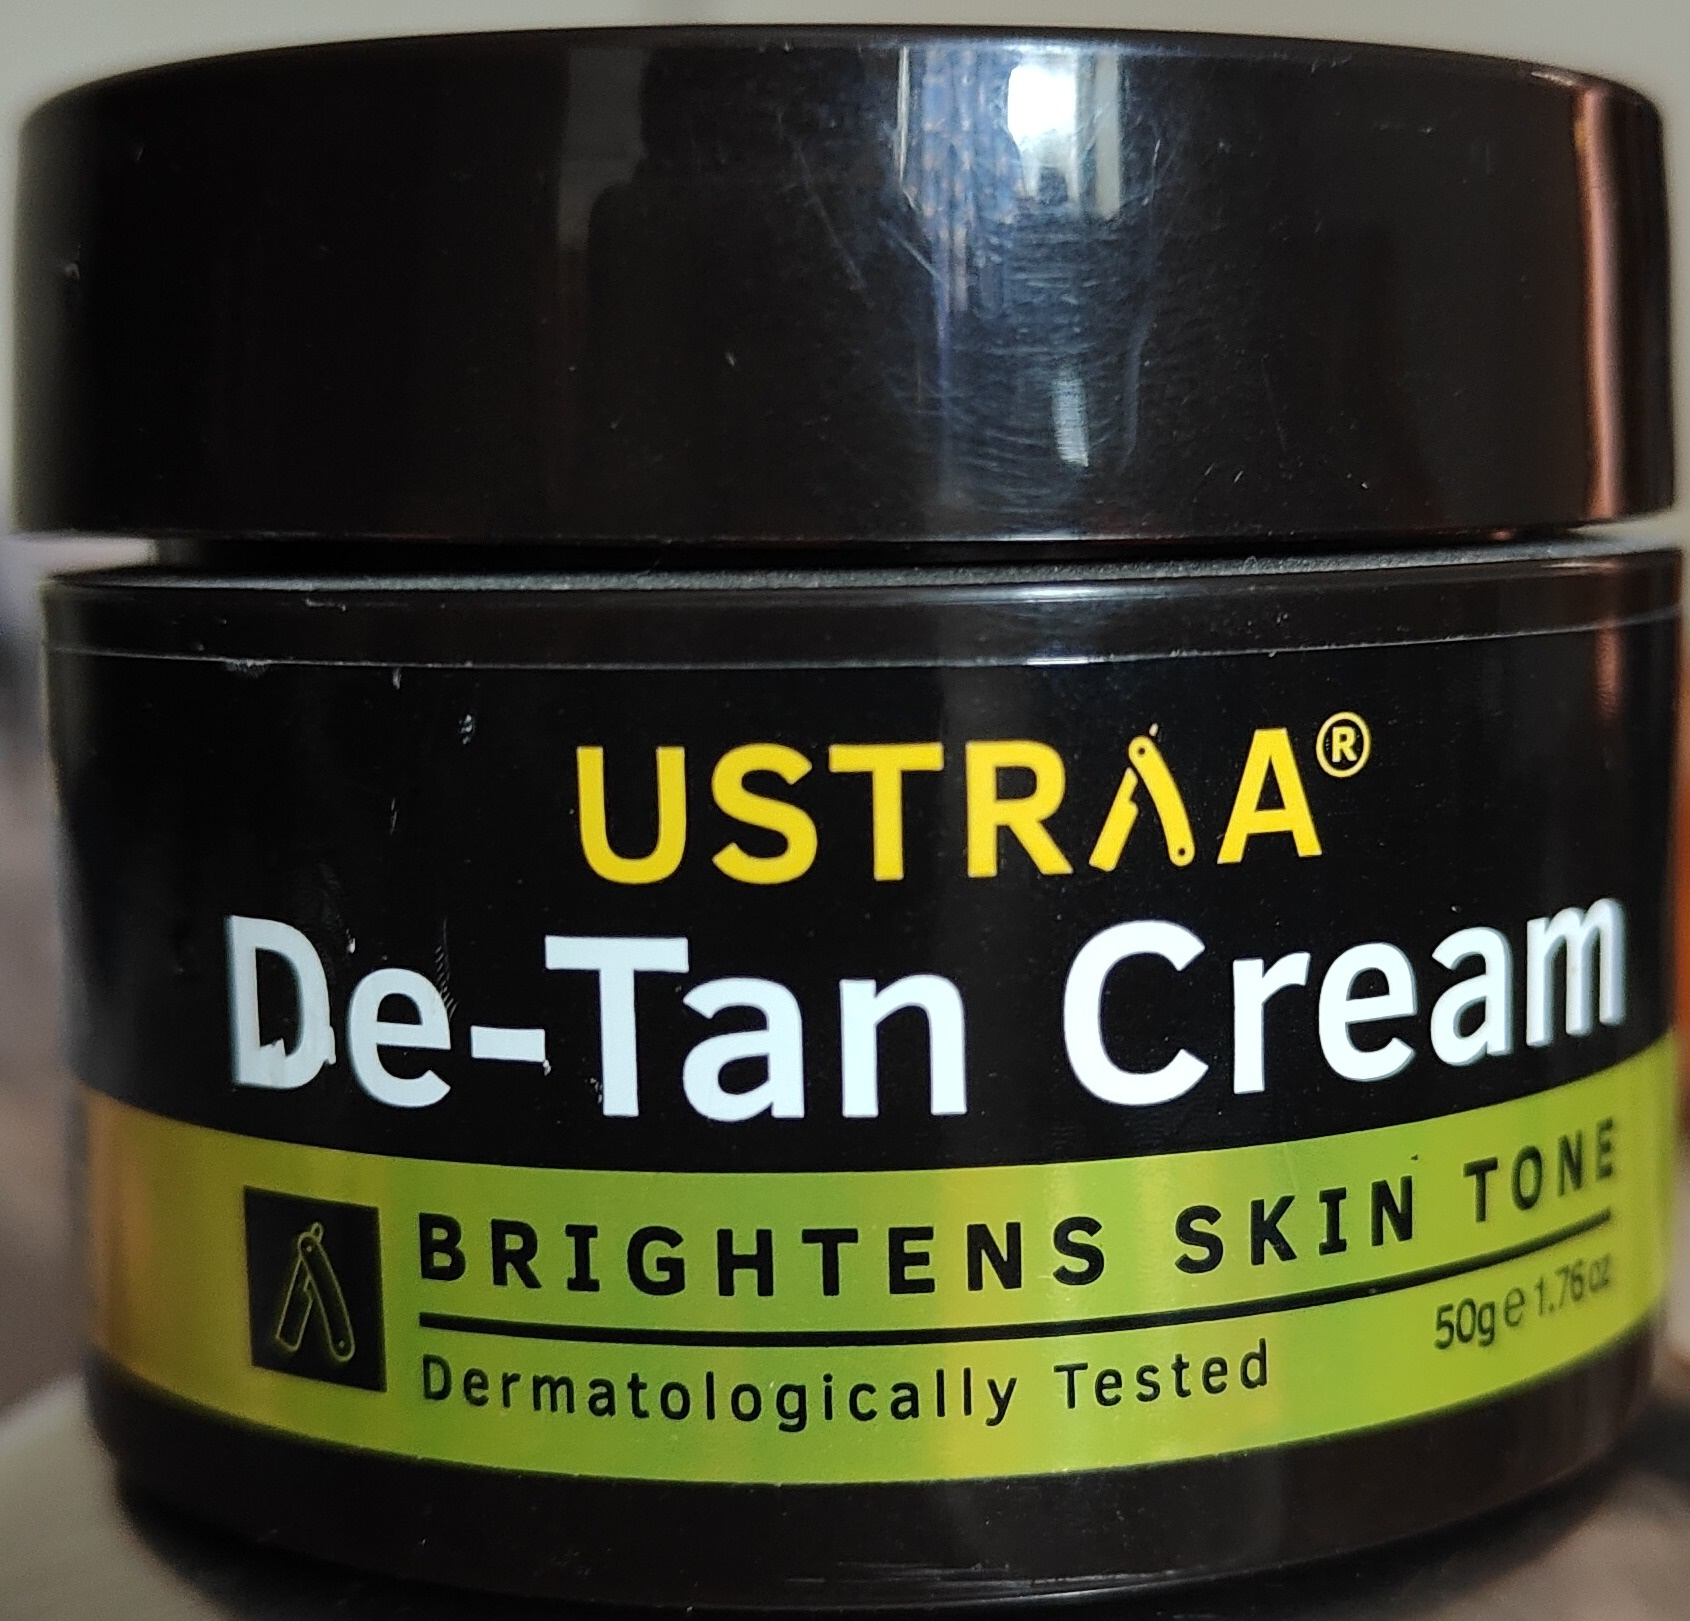 Ustraa De-tan Cream